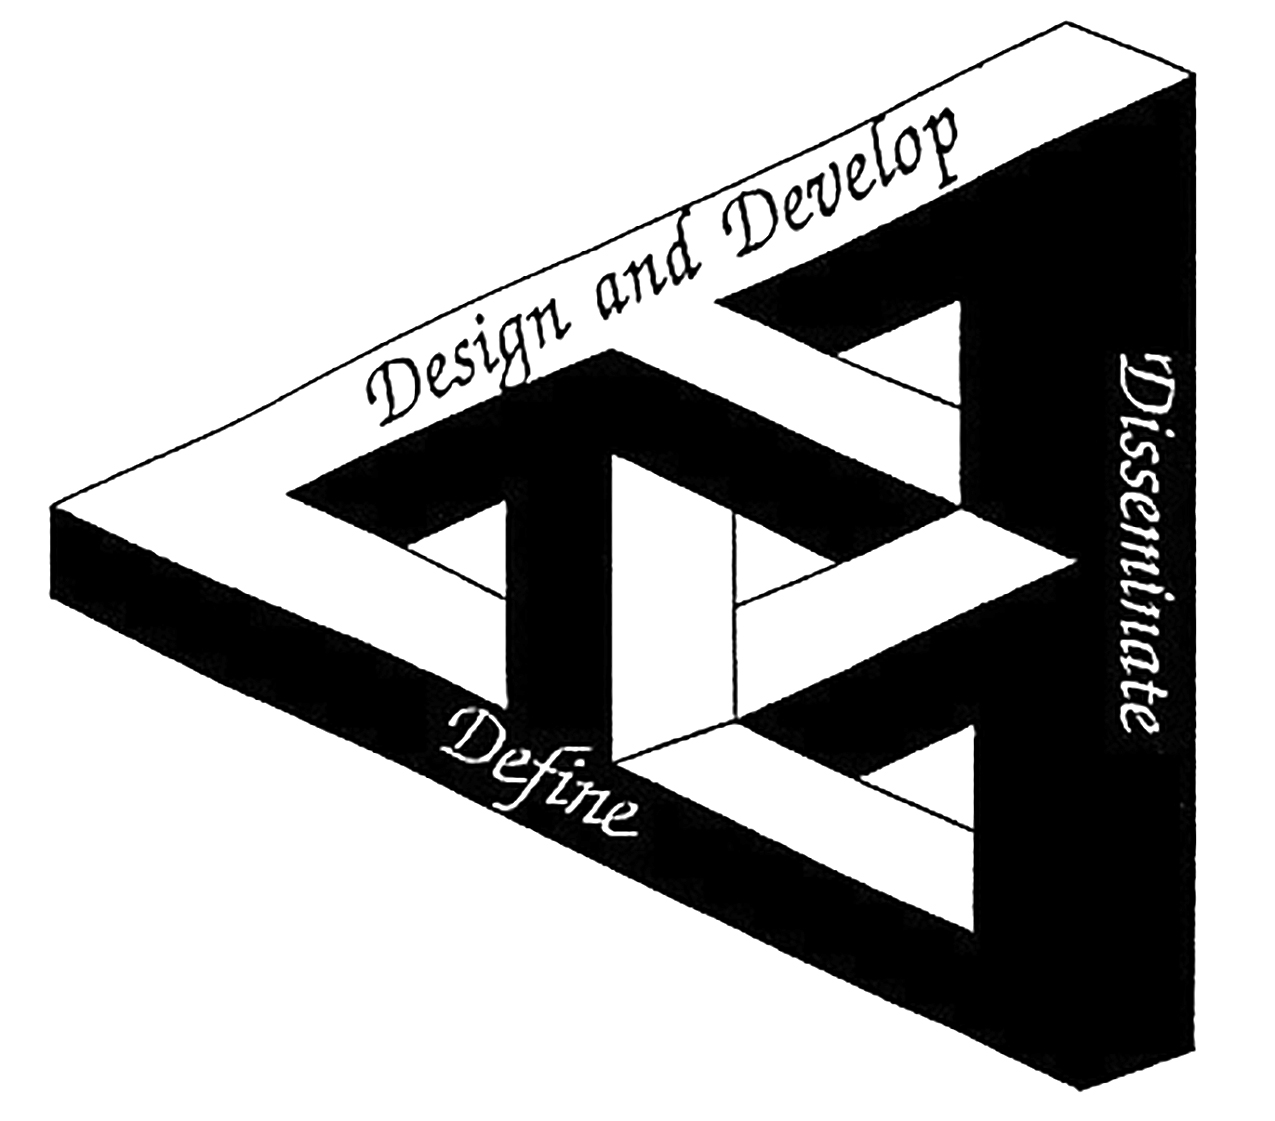 The R2D2 Model of Instructional Design